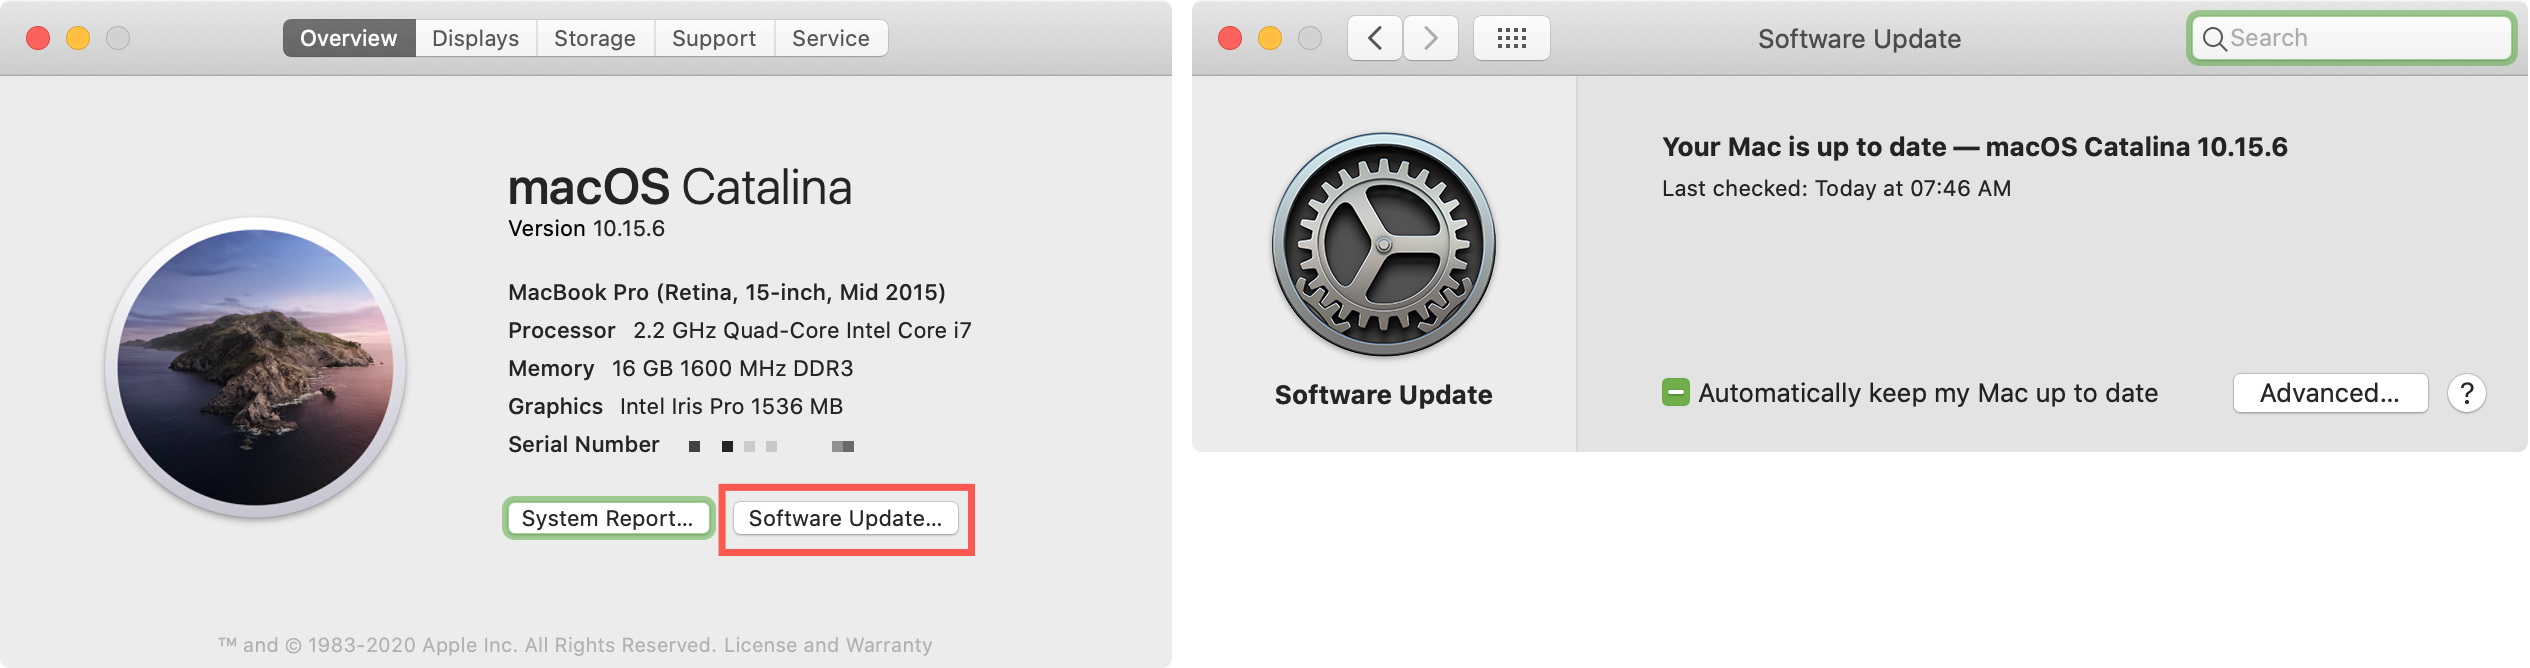 Acerca de esta actualización de software de Mac